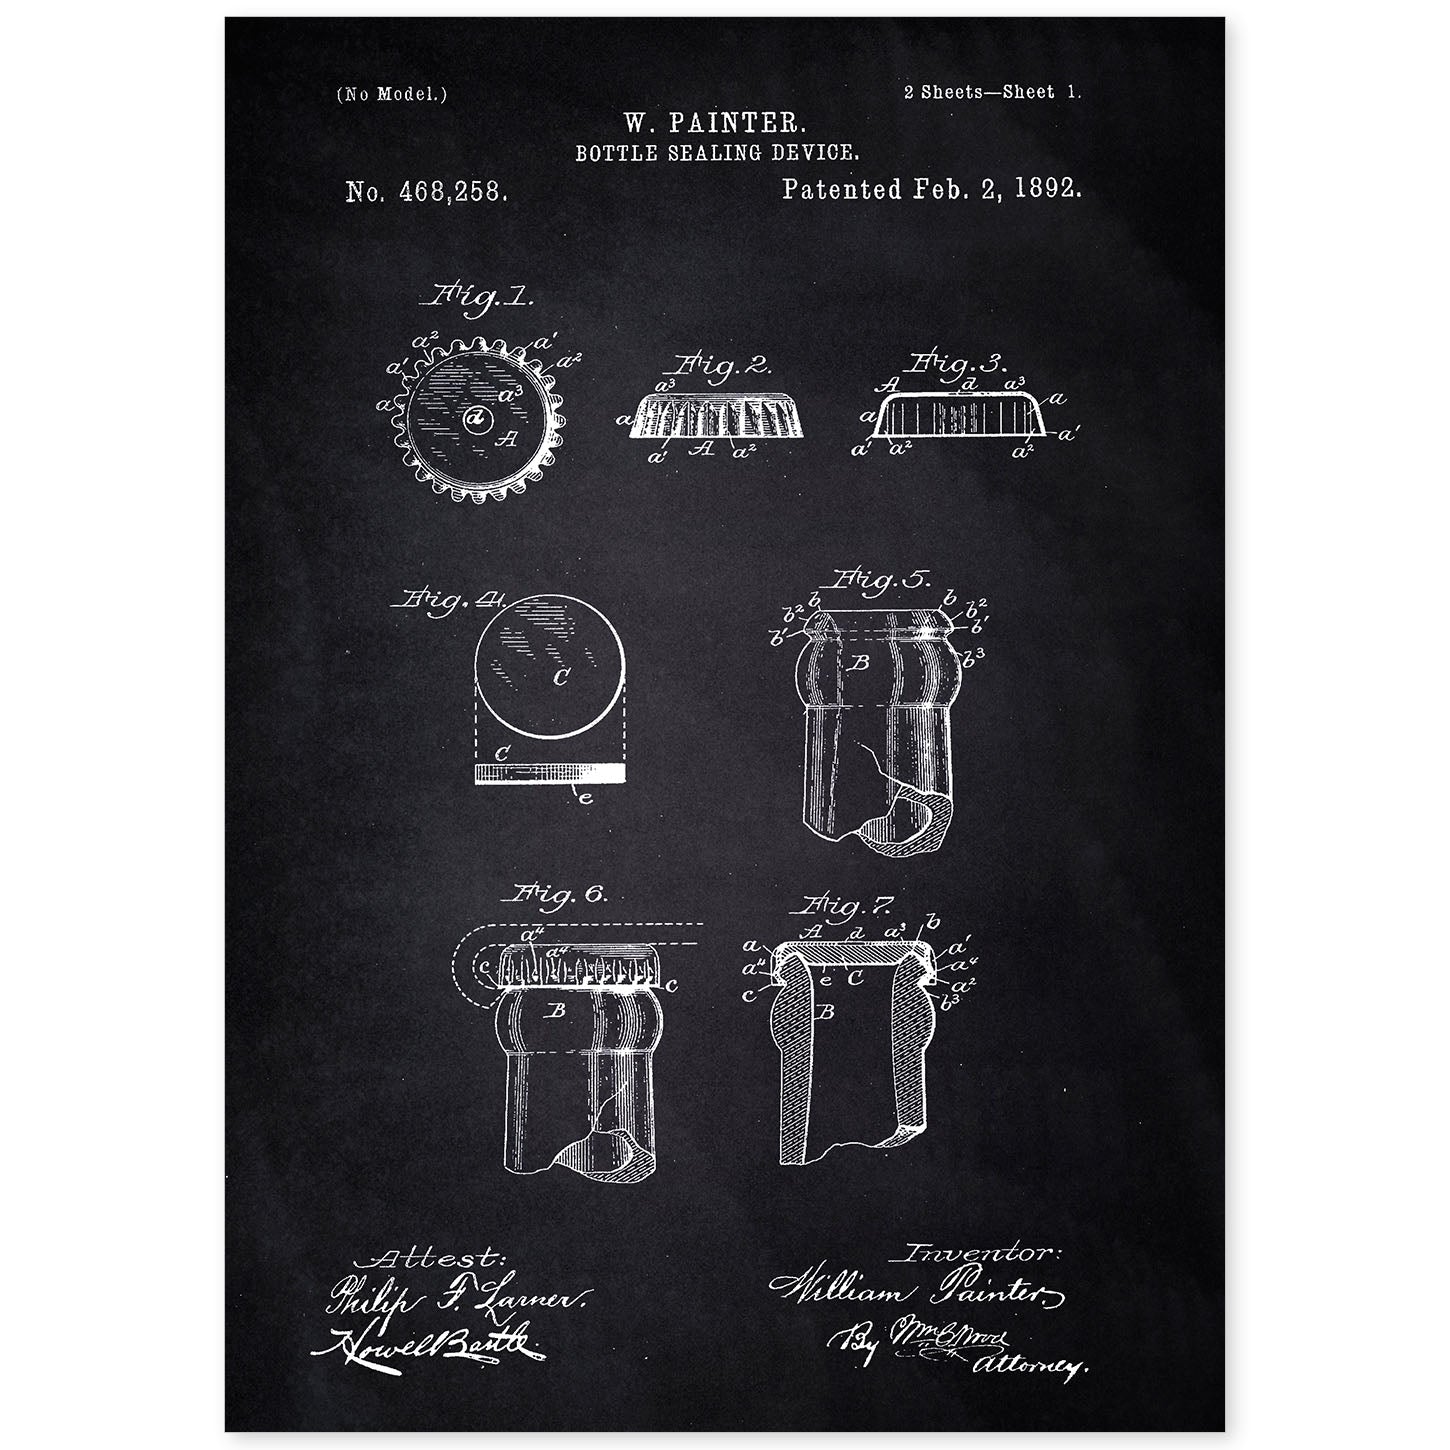 Poster con patente de Chapa de botella. Lámina con diseño de patente antigua-Artwork-Nacnic-A4-Sin marco-Nacnic Estudio SL